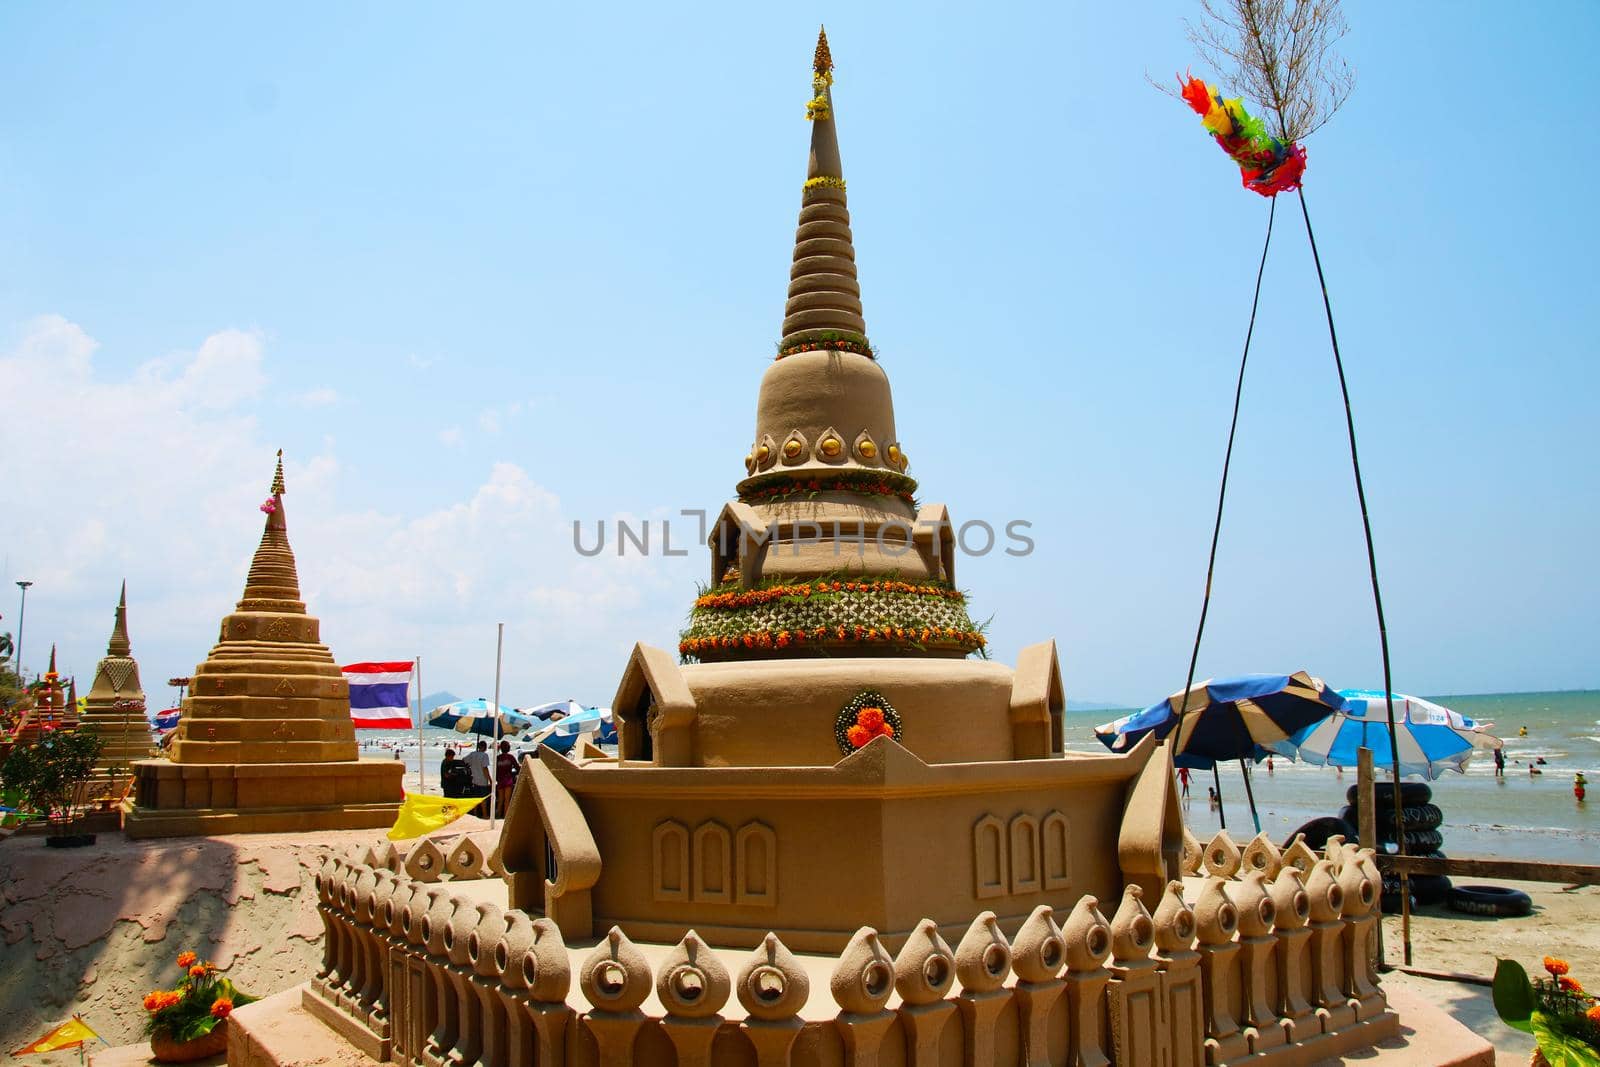 royal sand pagoda was carefully built, and beautifully decorated Songkran festival by Darkfox